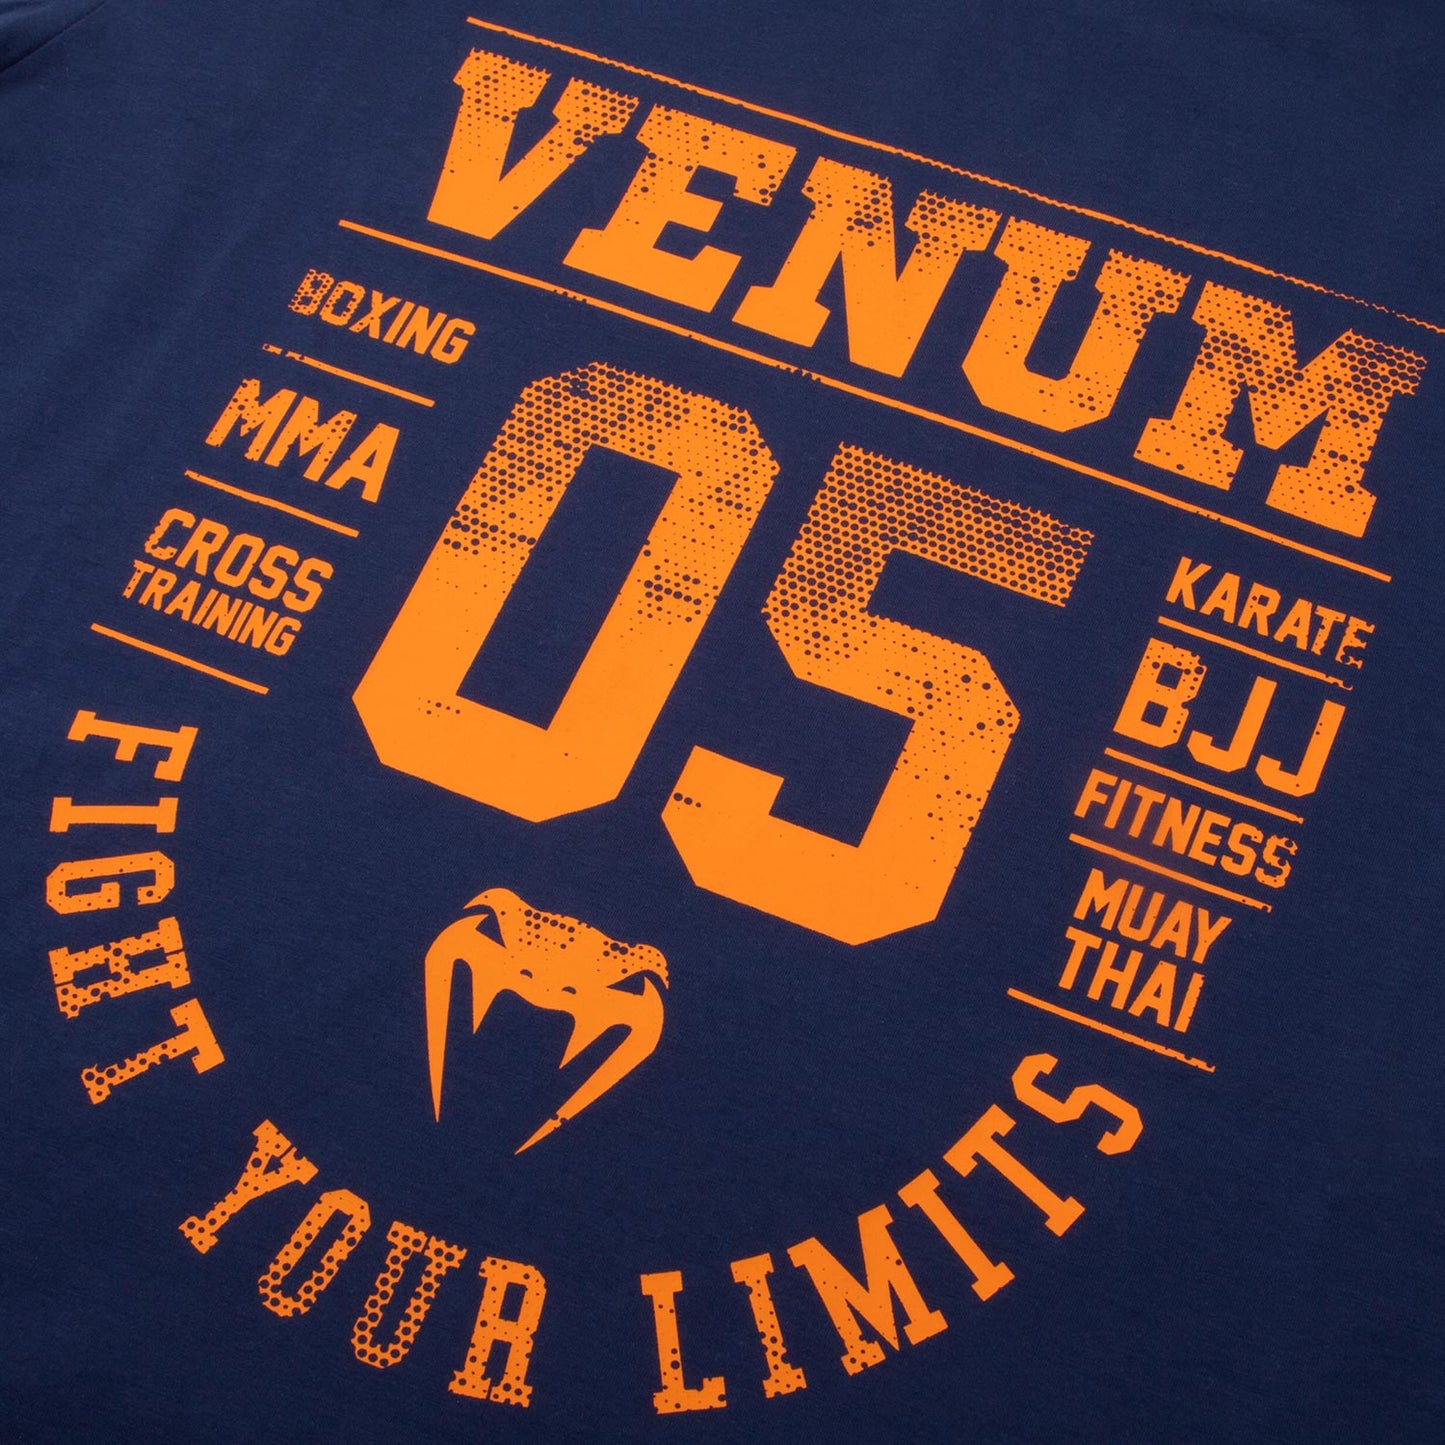 Venum Origins T-Shirt - Blue